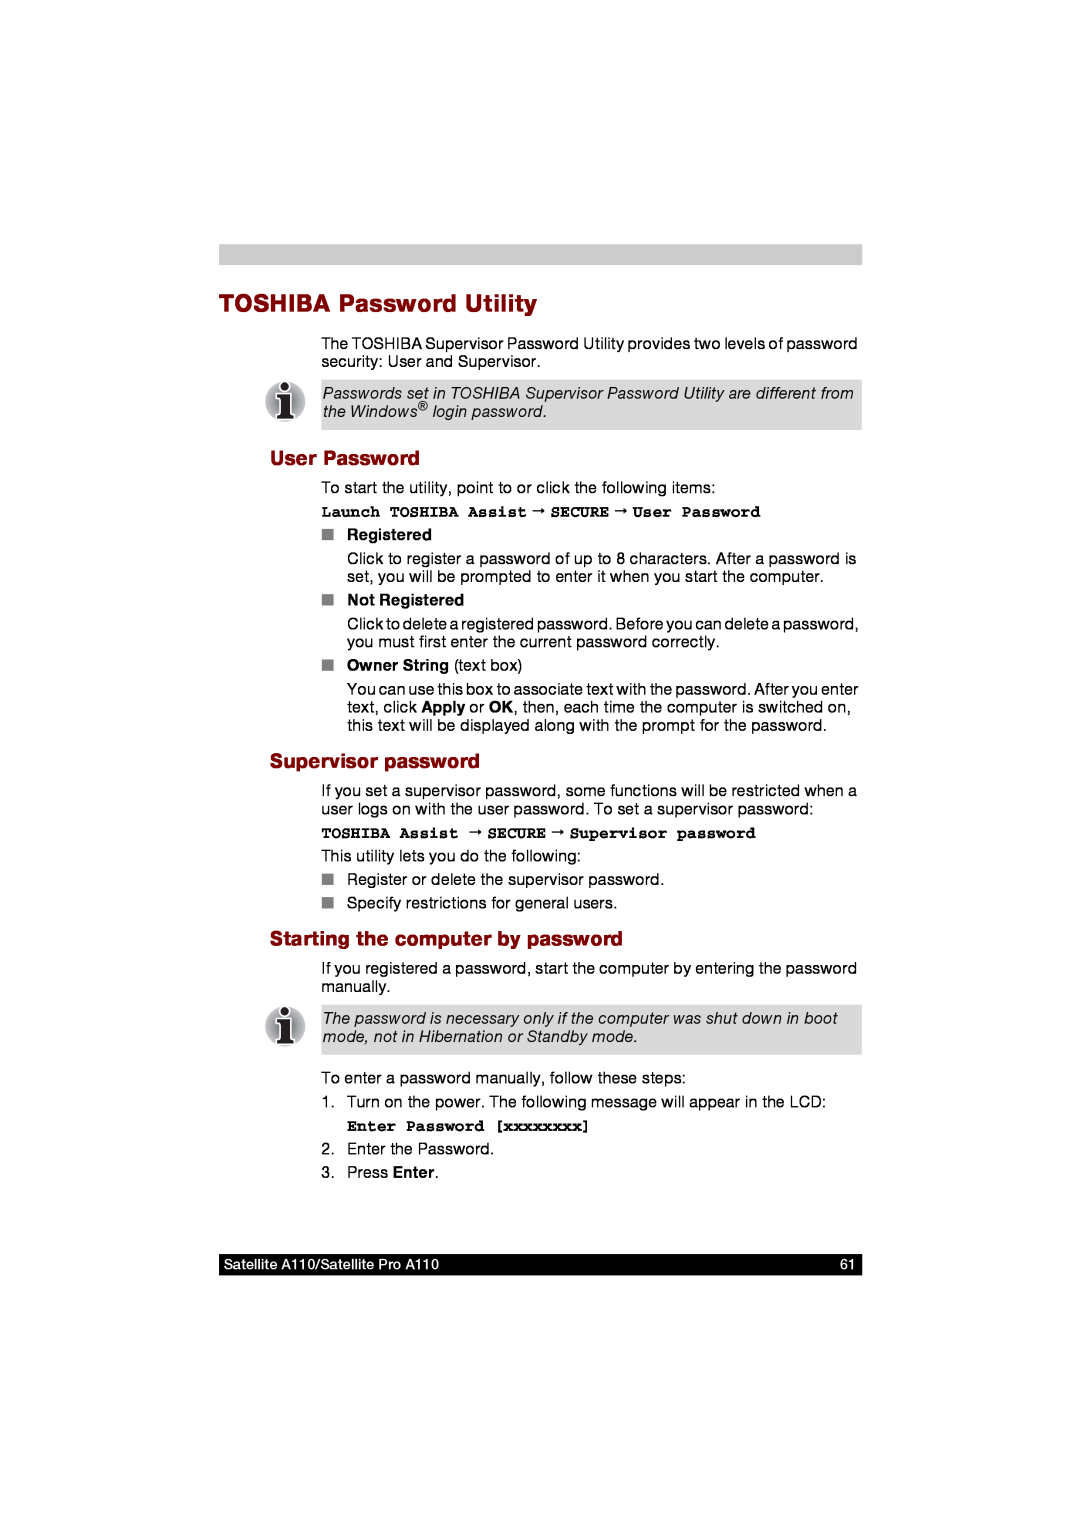 Toshiba A110 user manual TOSHIBA Password Utility, User Password, Supervisor password, Starting the computer by password 